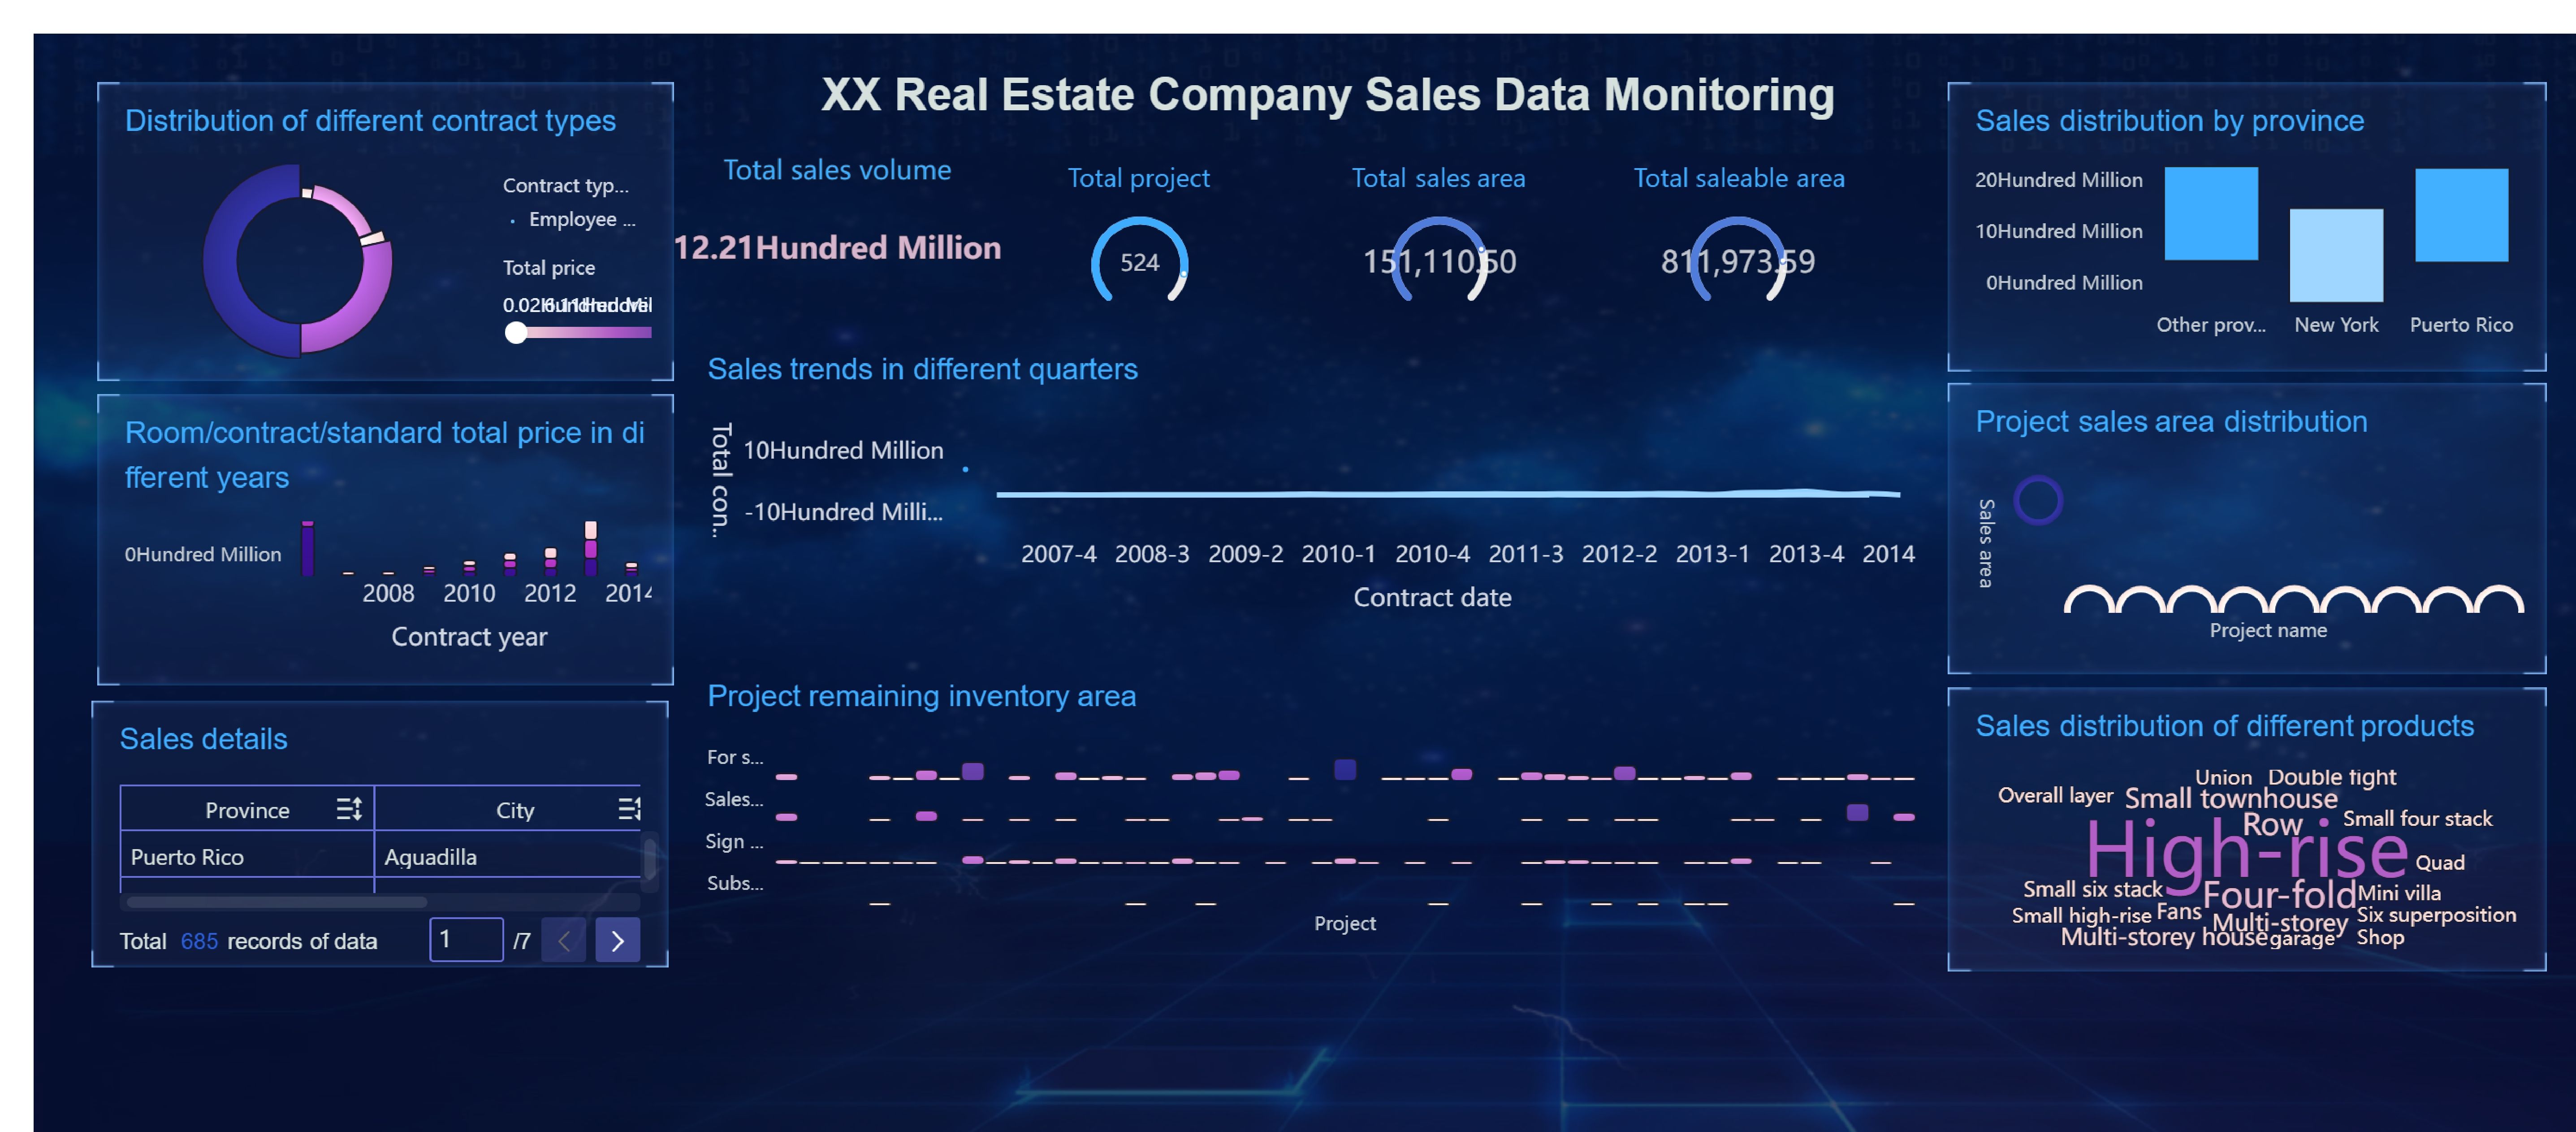 Real_Estate_Company_Sales_Monitoring_page-0001.jpg